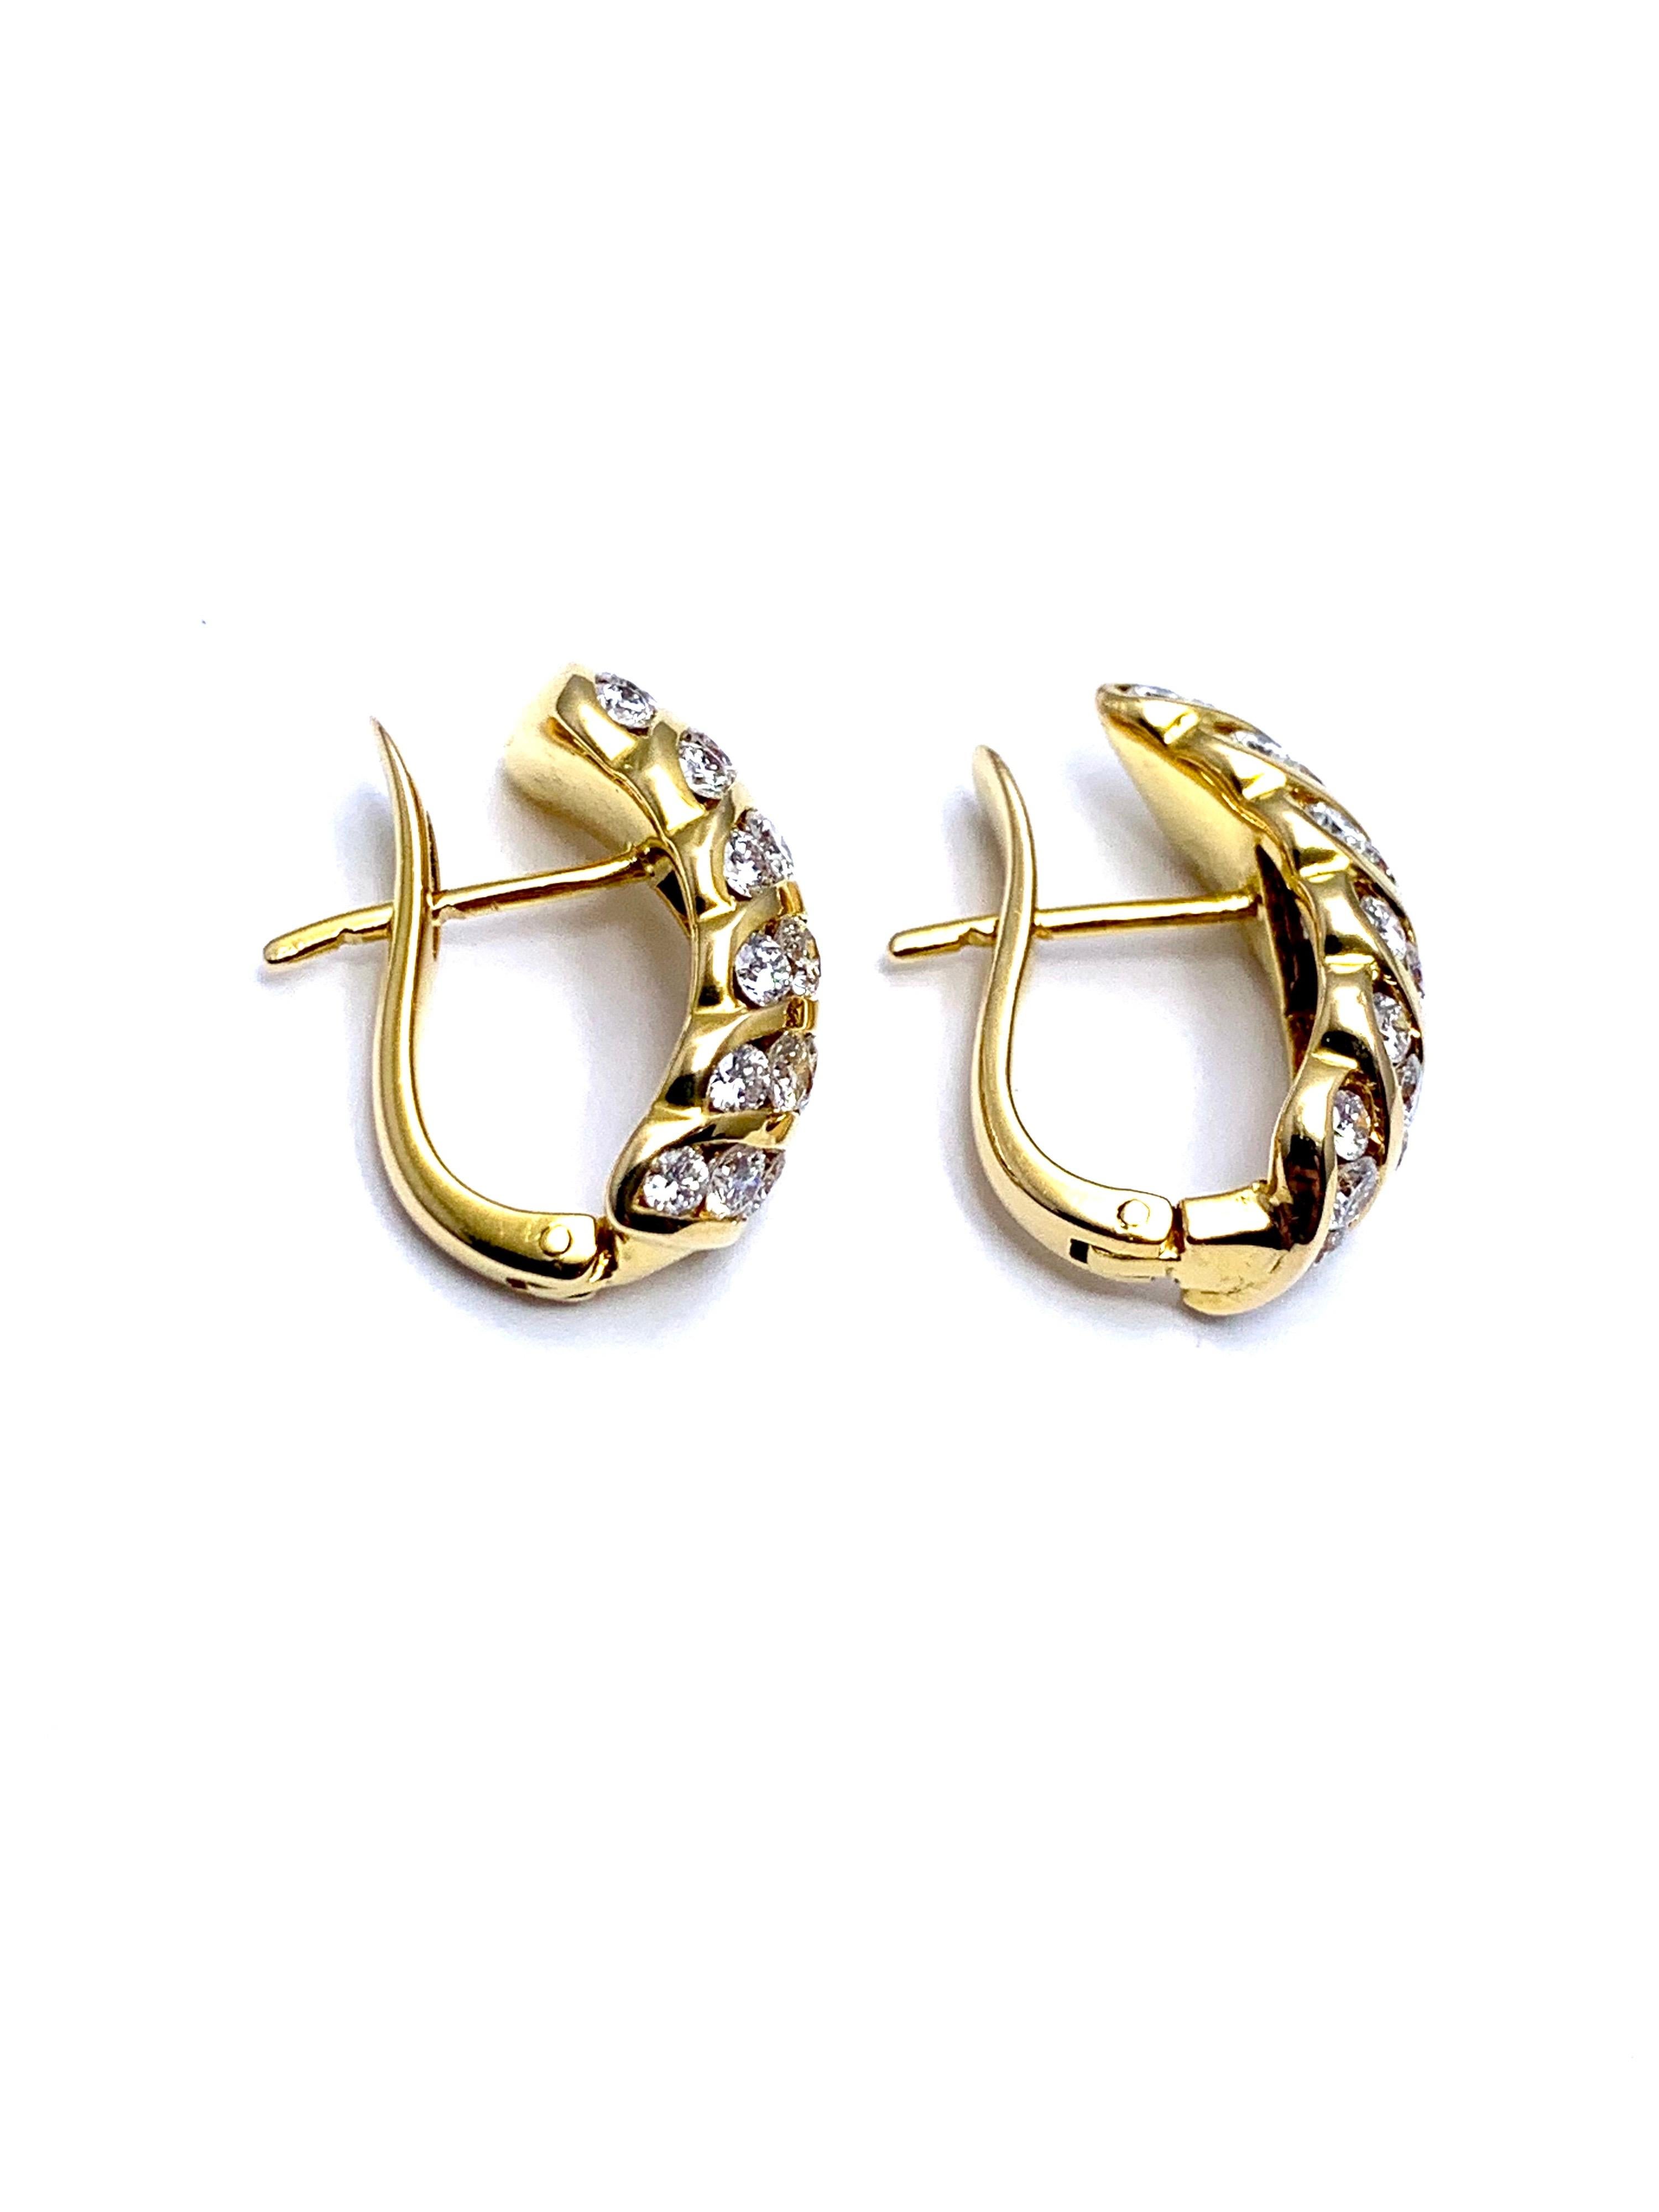 Modern 2.56 Carat Round Brilliant Diamond and 18 Karat Yellow Gold Semi Hoop Earrings